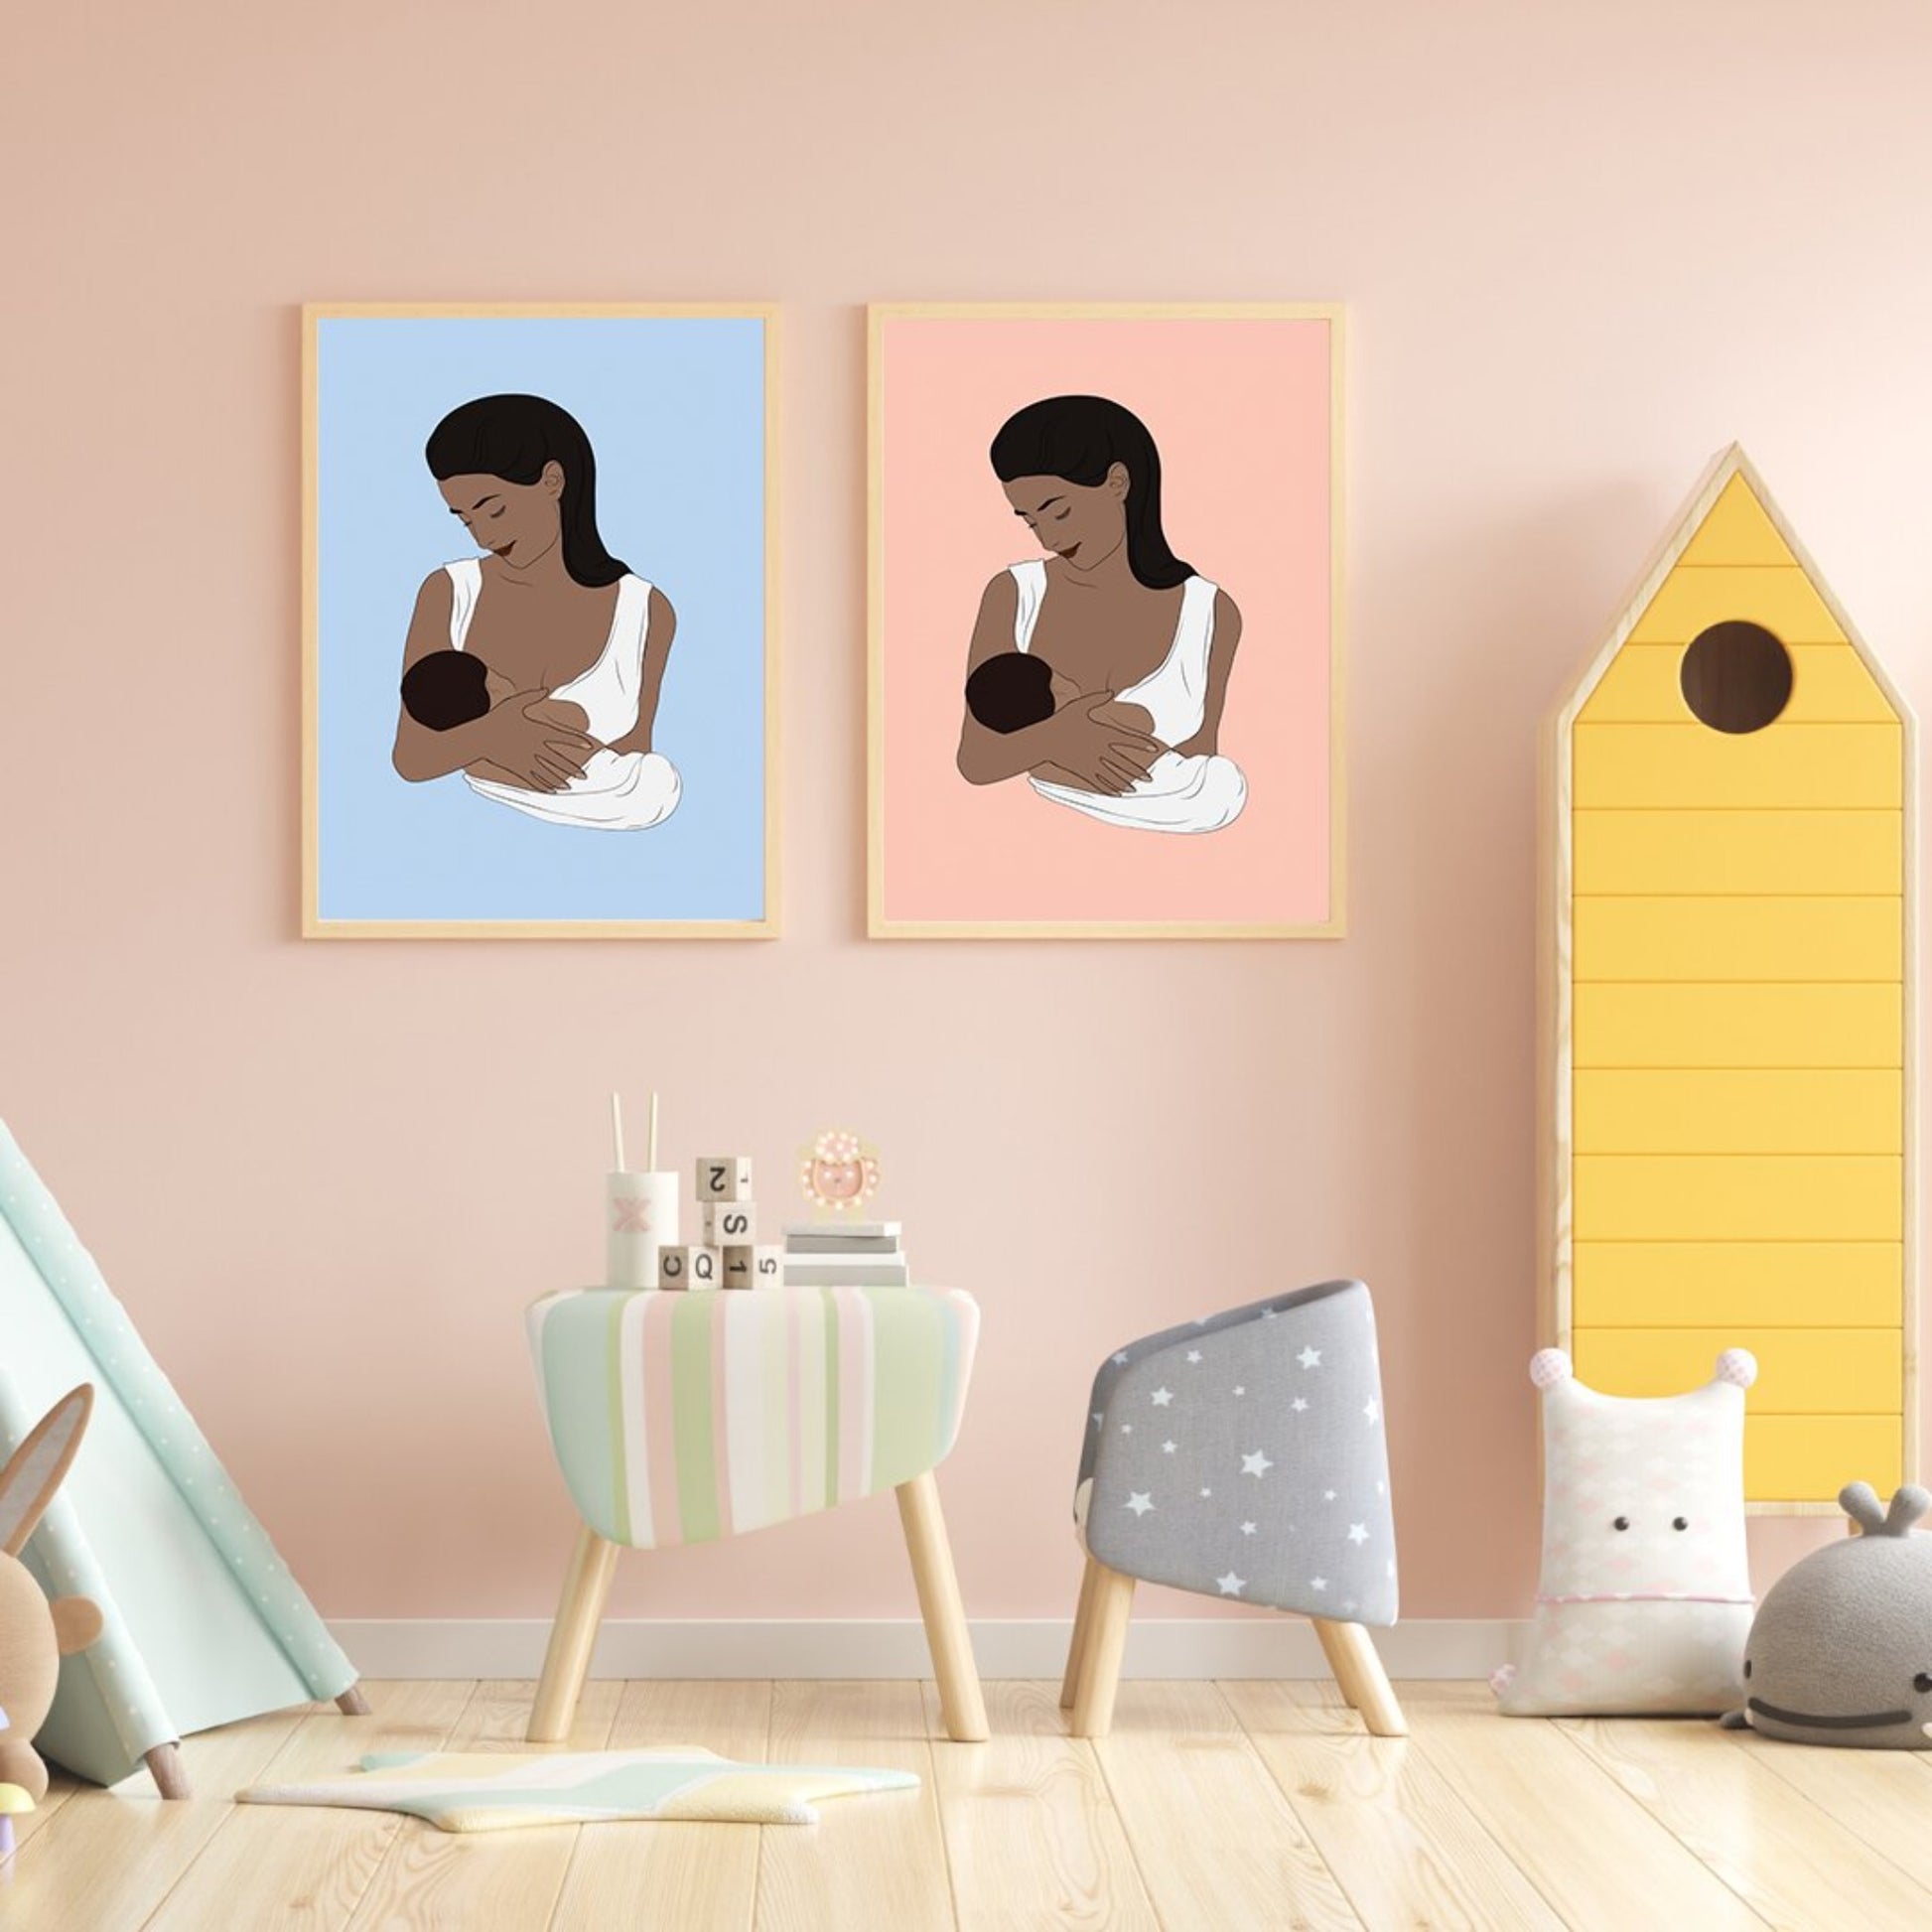 Mom Breastfeeding Wall Print - Mom Wall Art - Digital Art Print for Nursery - Home Decor.